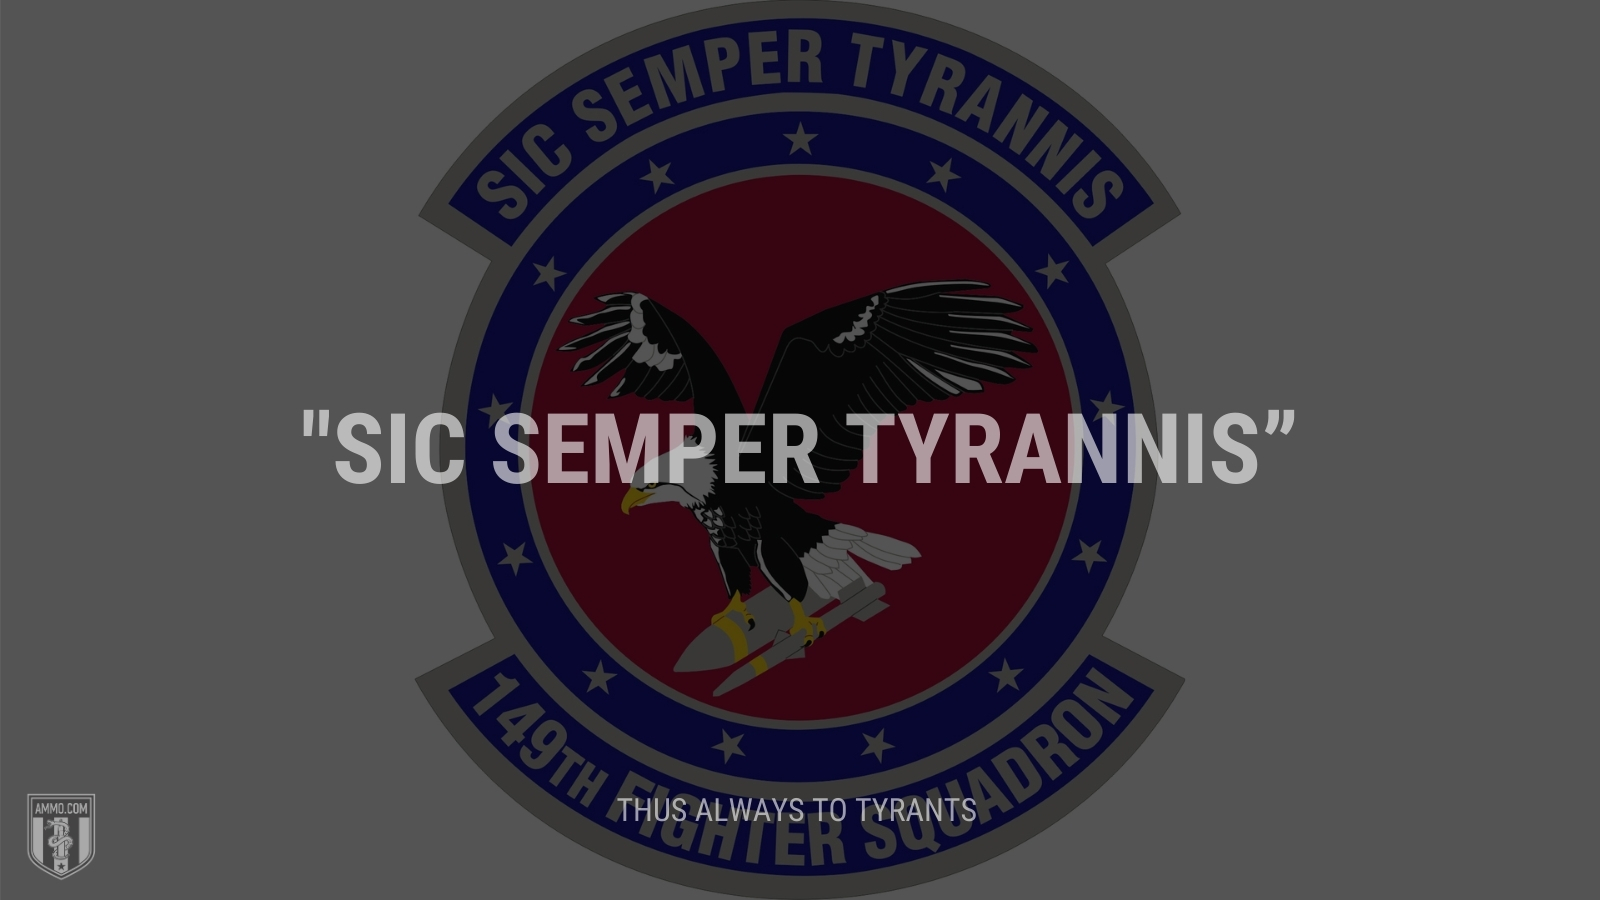 “Sic semper tyrannis” - Thus always to tyrants